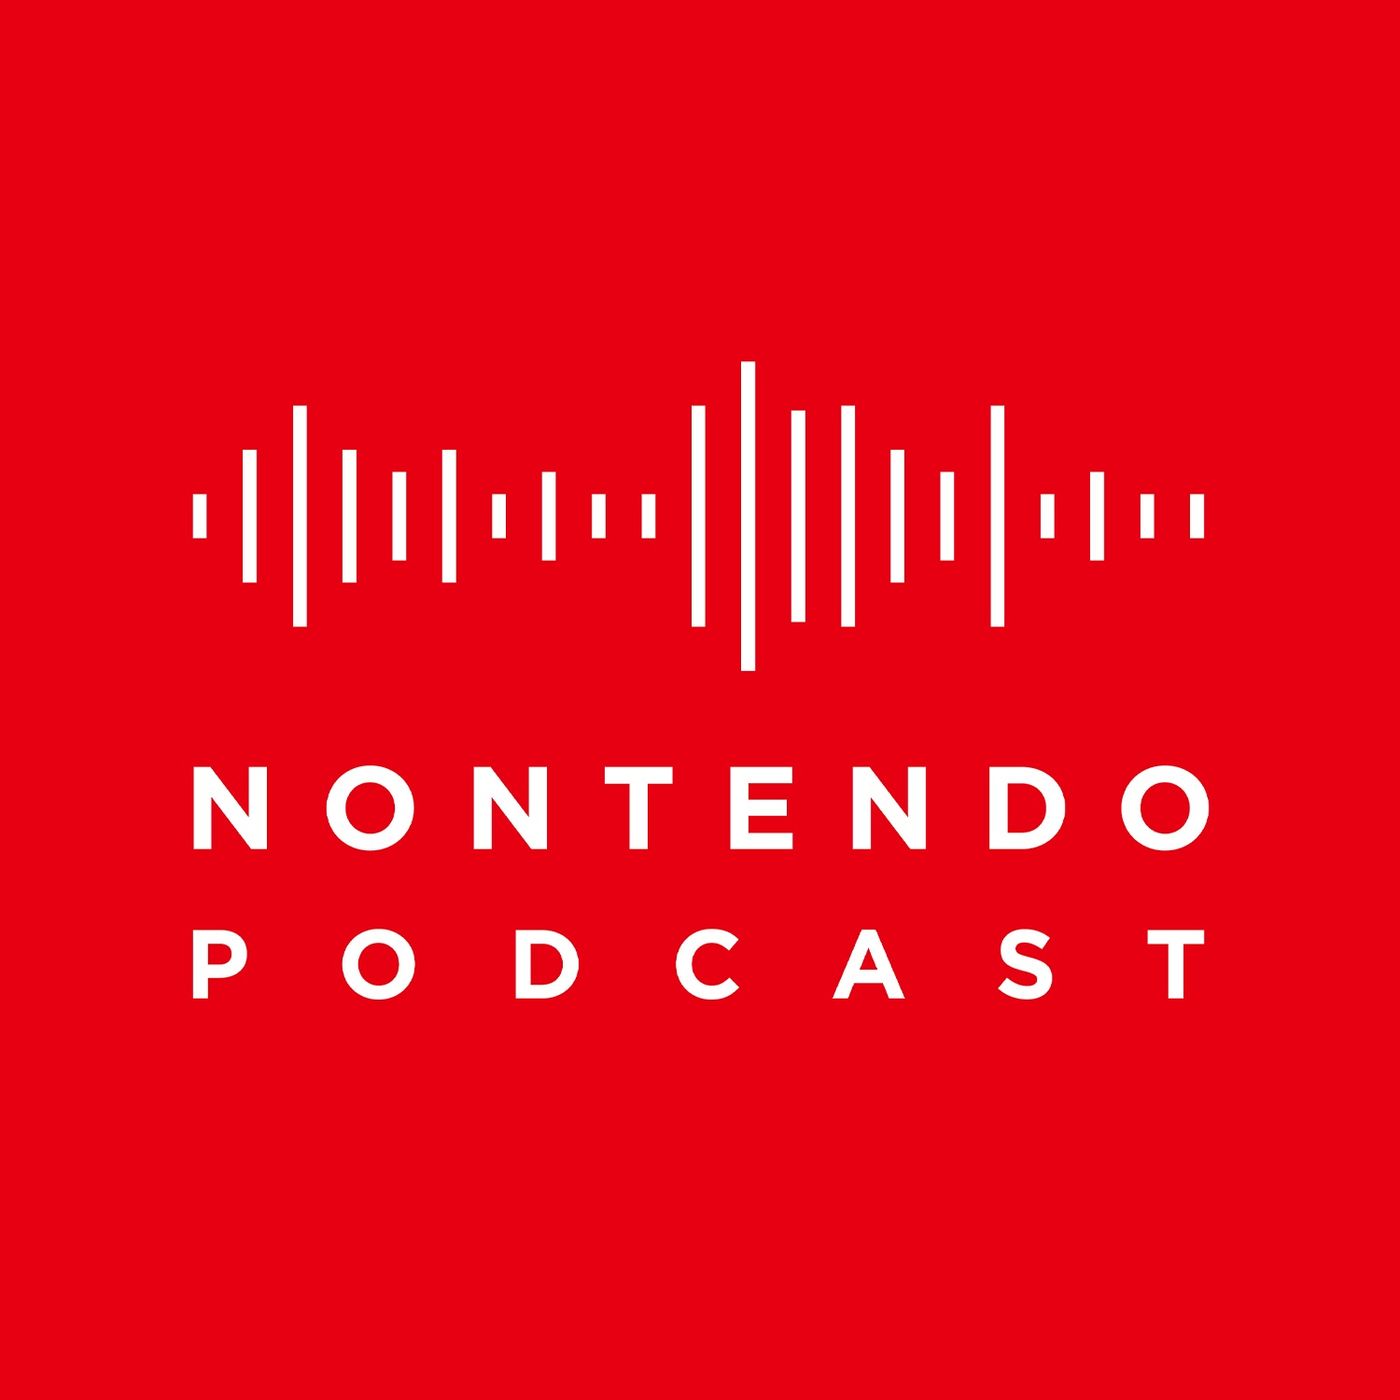 Nintendo Direct NEXT WEEK & SWITCH 2 in MARCH! | KIT & KRYSTA vs. NONTENDO | #86